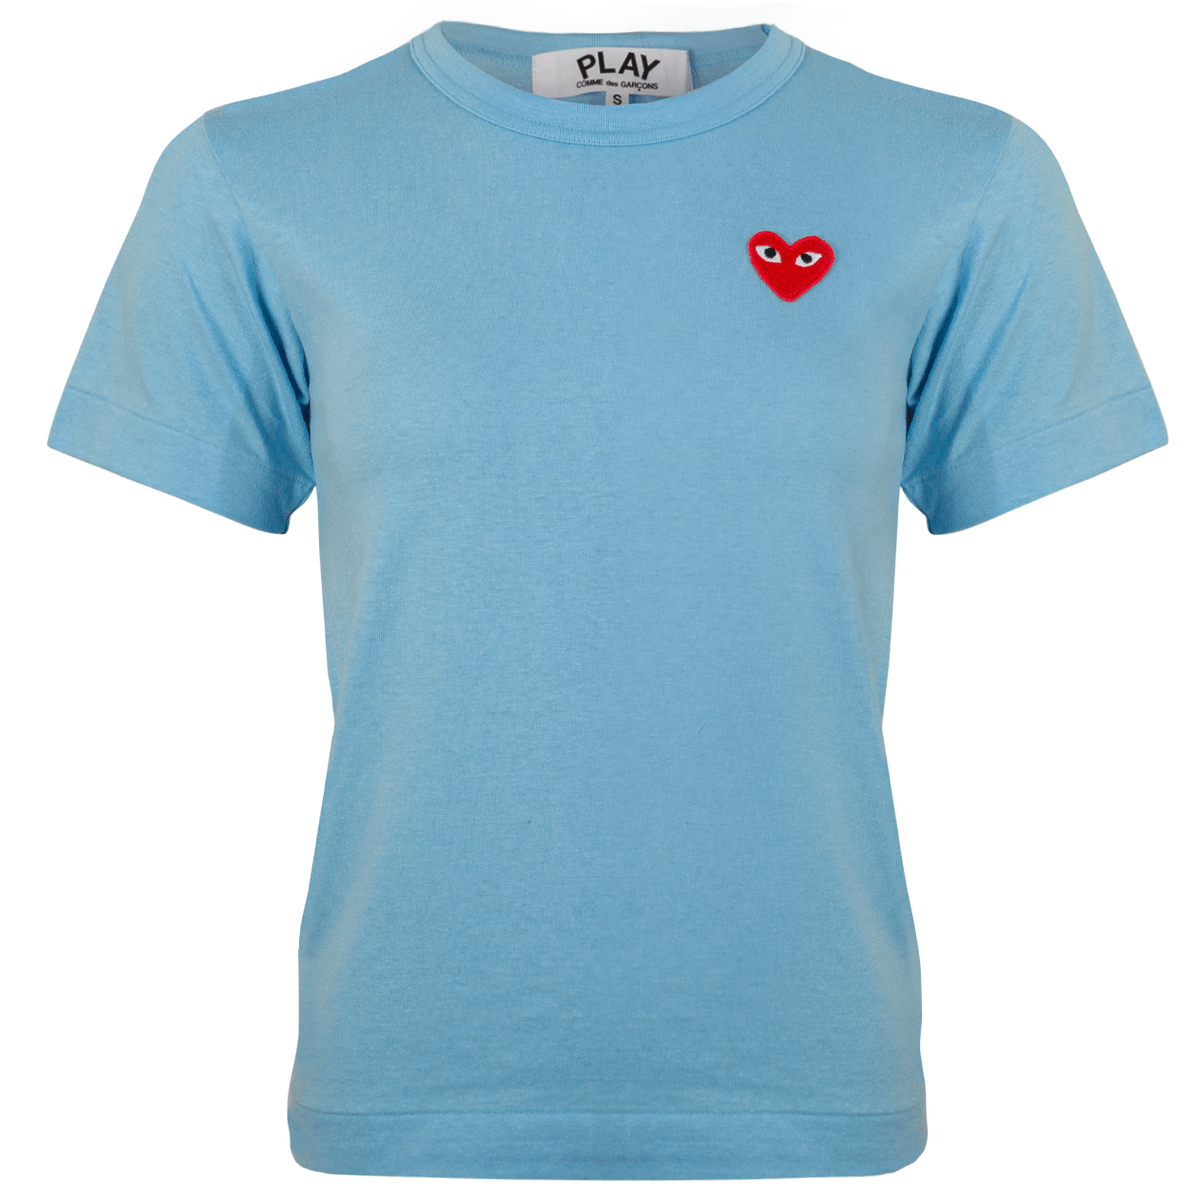 T271 Bright Red Heart T-shirt Blue L Light Blue